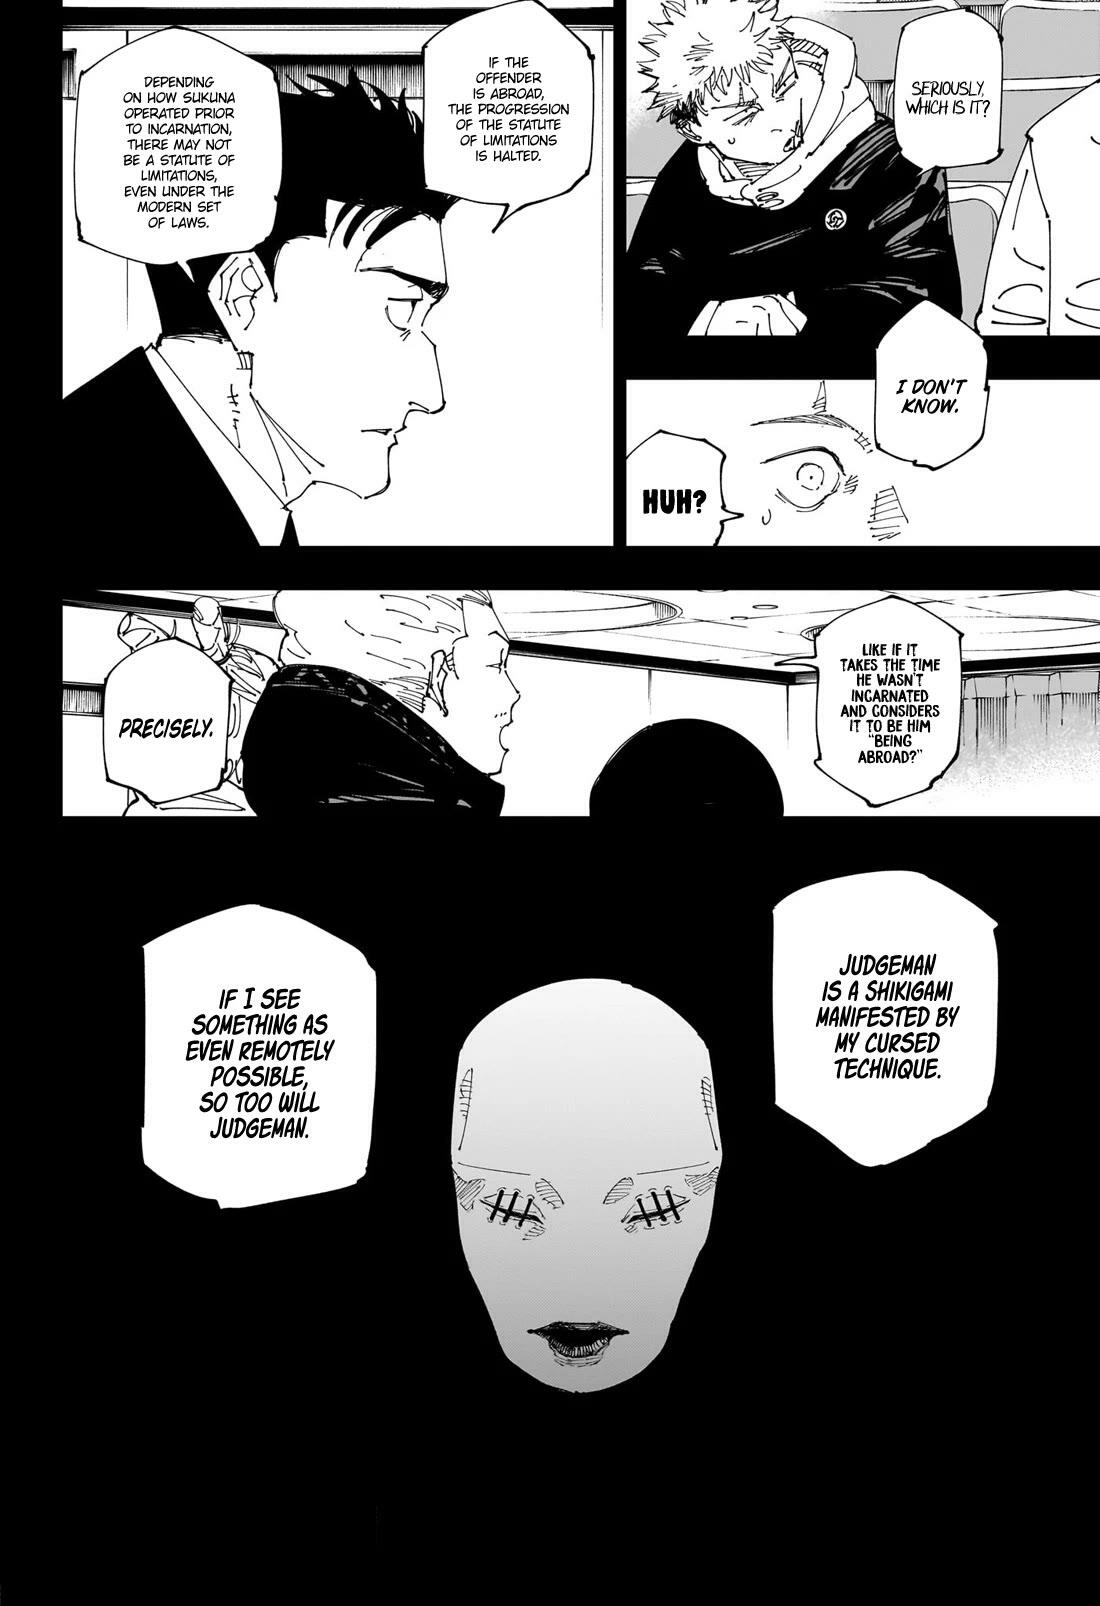 Jujutsu Kaisen Chapter 244: The Decisive Battle In The Uninhabited, Demon-Infested Shinjuku ⑯ page 11 - Mangakakalot